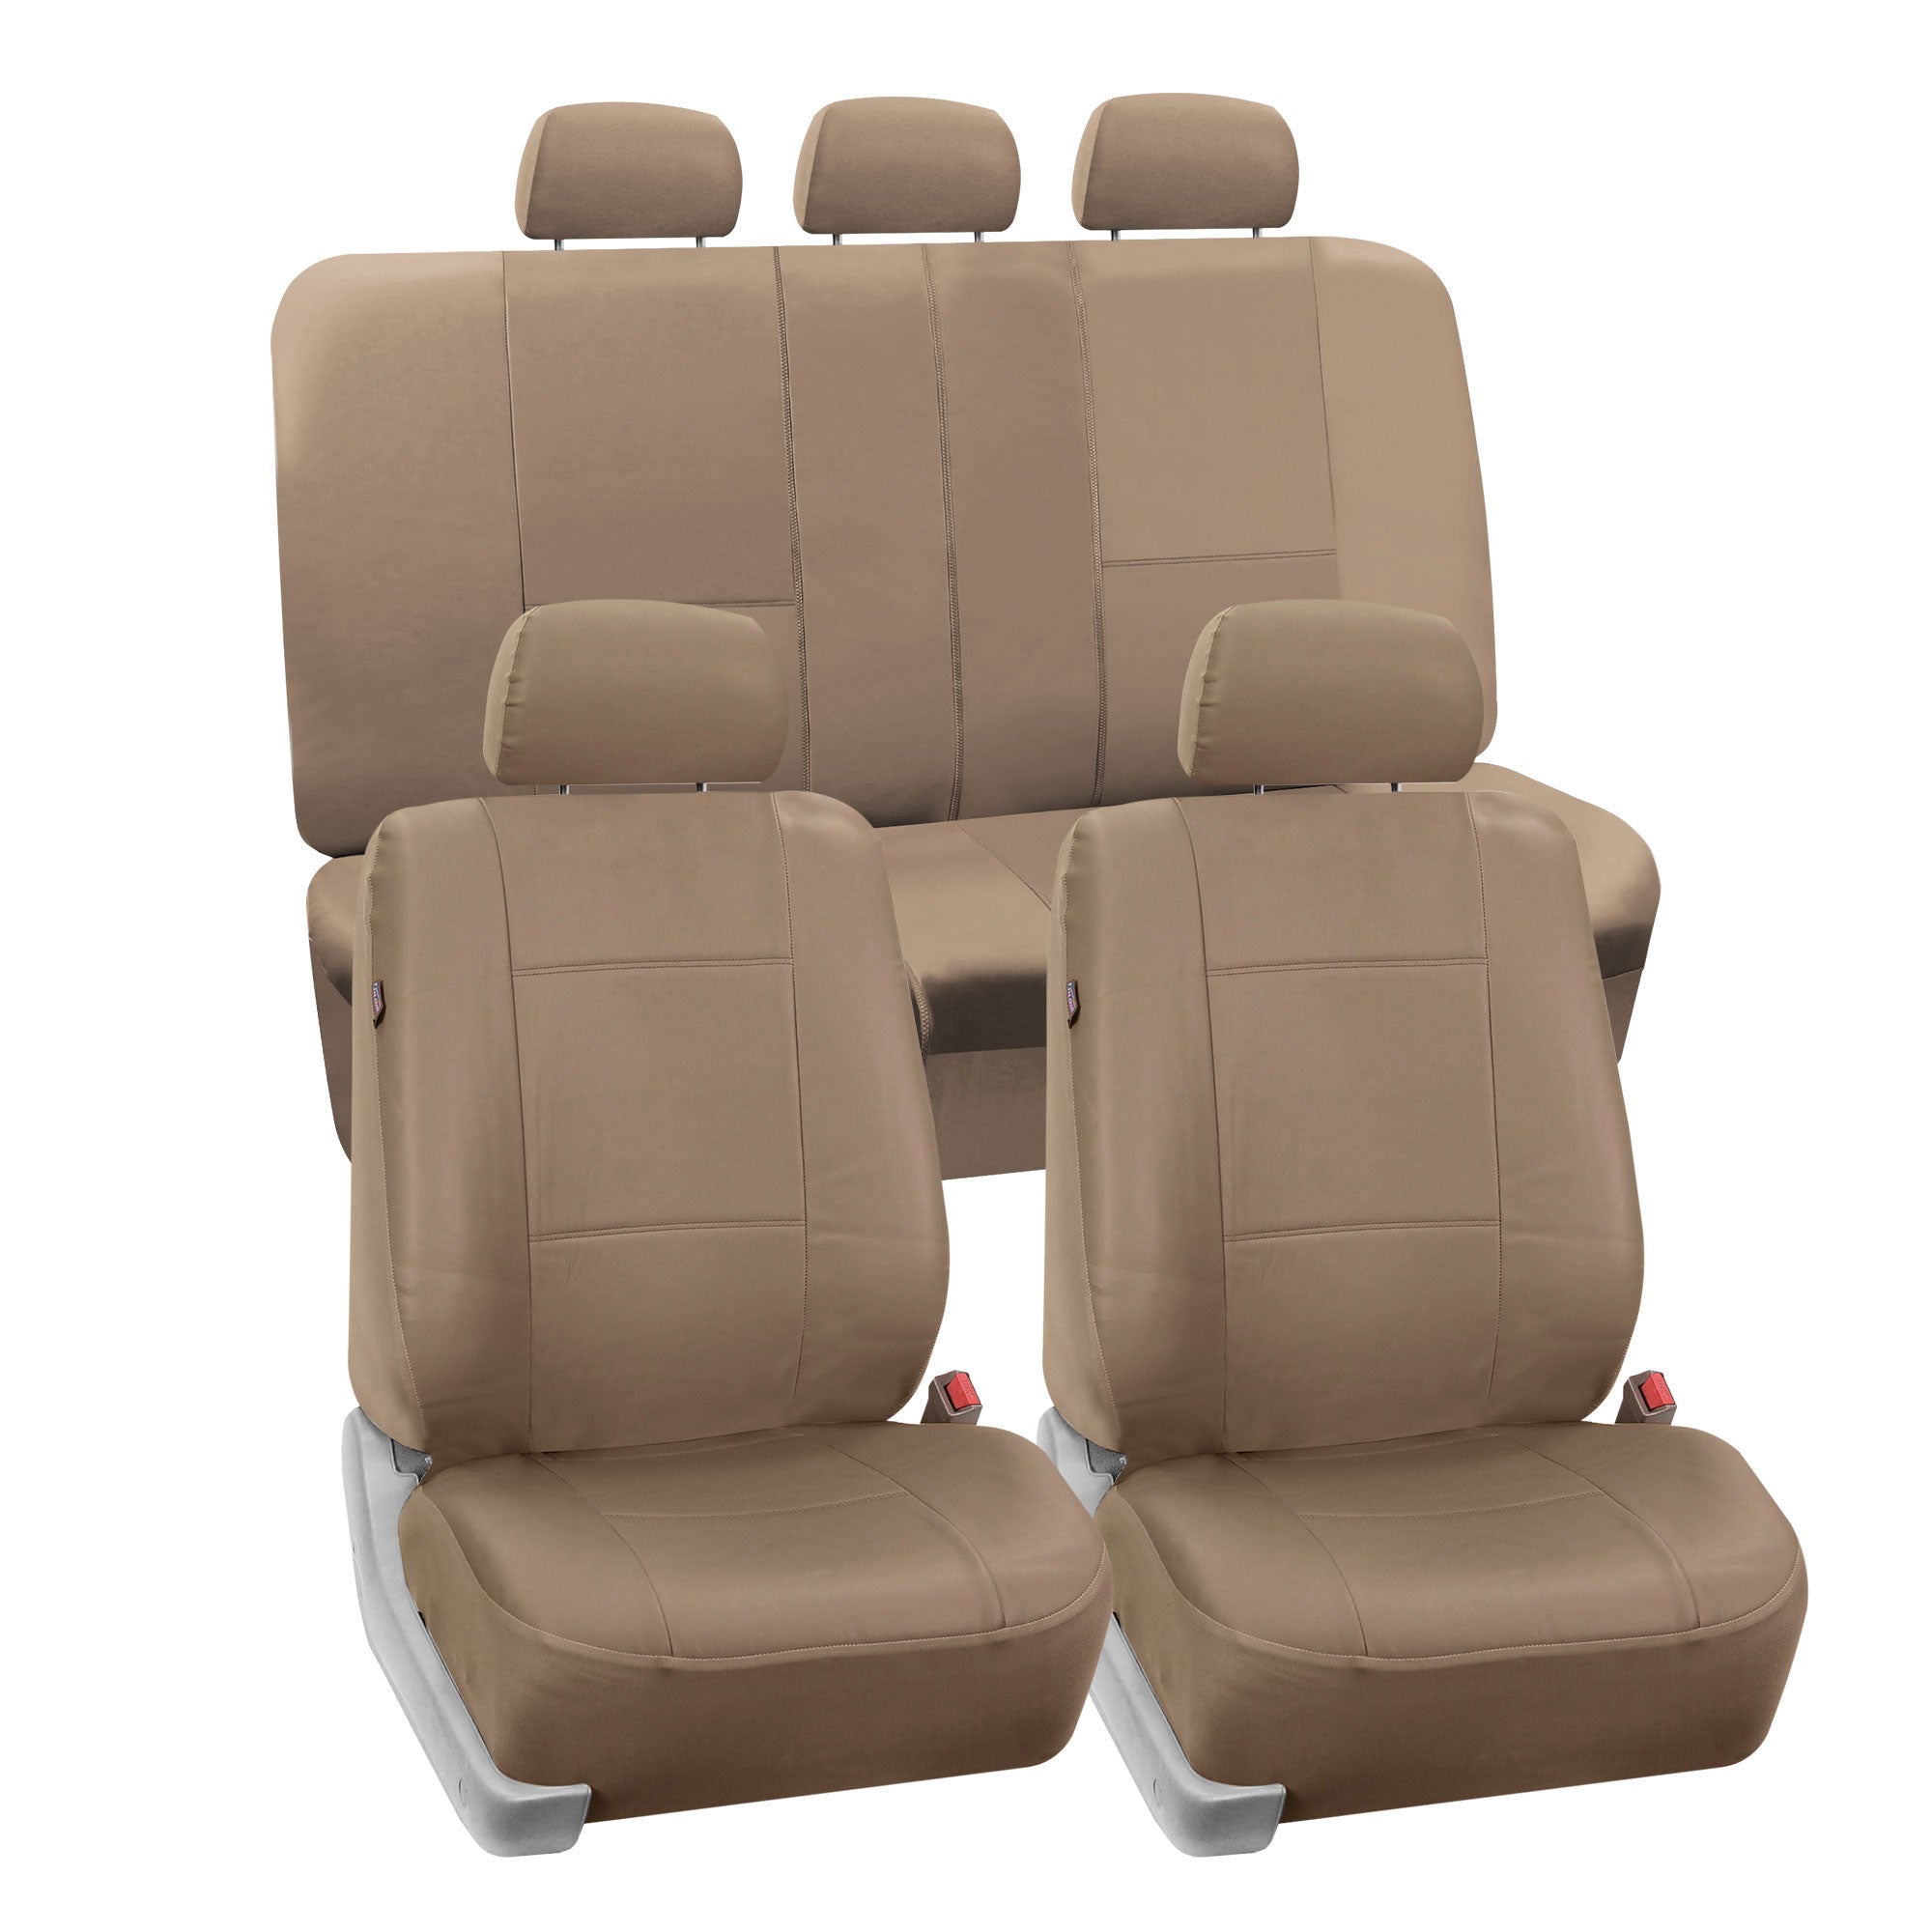 Premium PU Leather Seat Covers - Full Set Tan